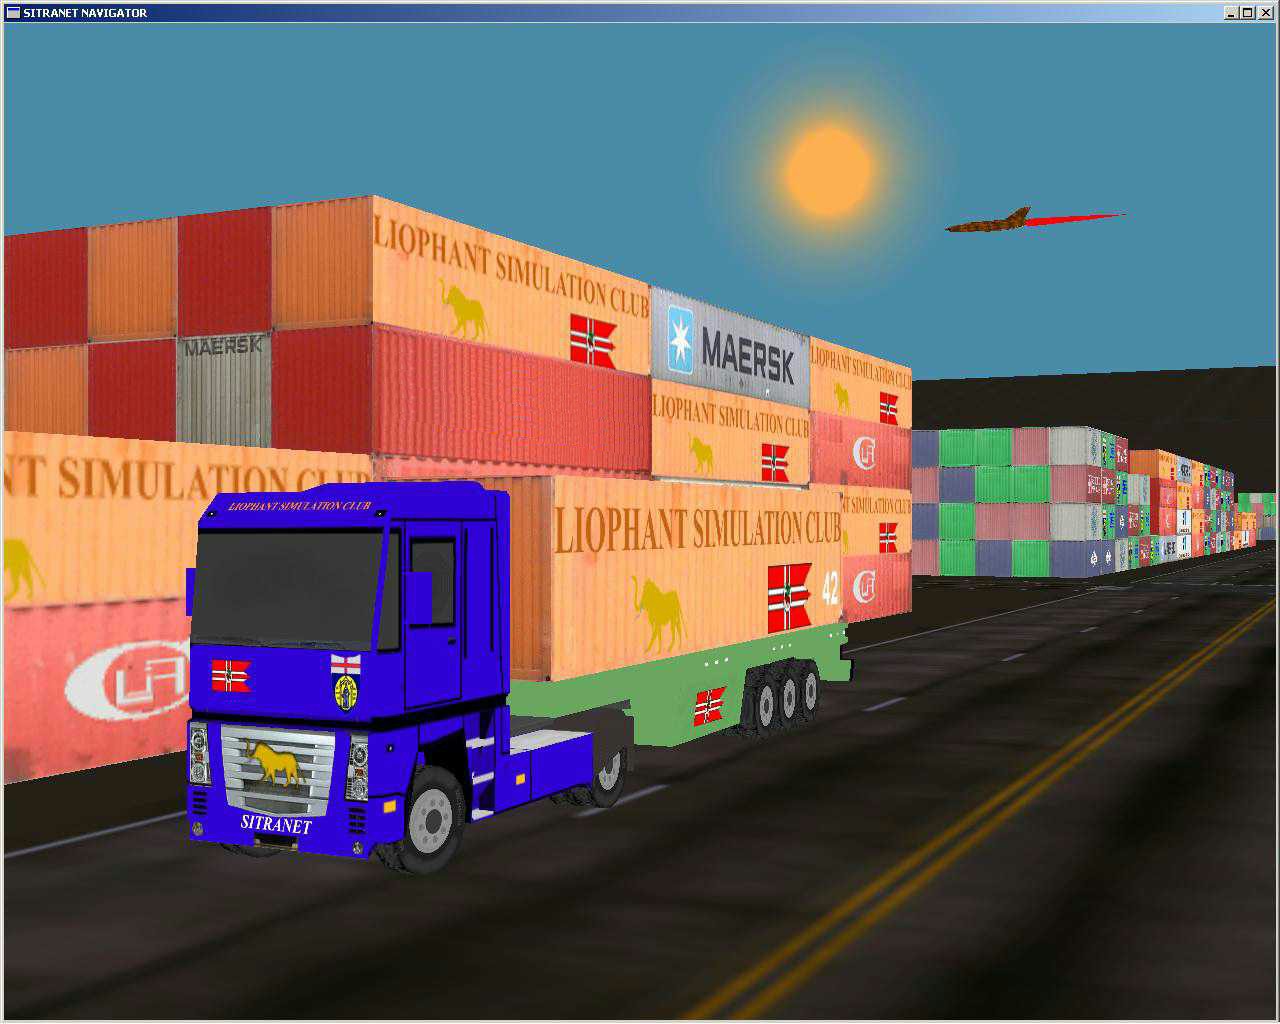 SITRANET Truck Simulator - Liophant Simulation Club